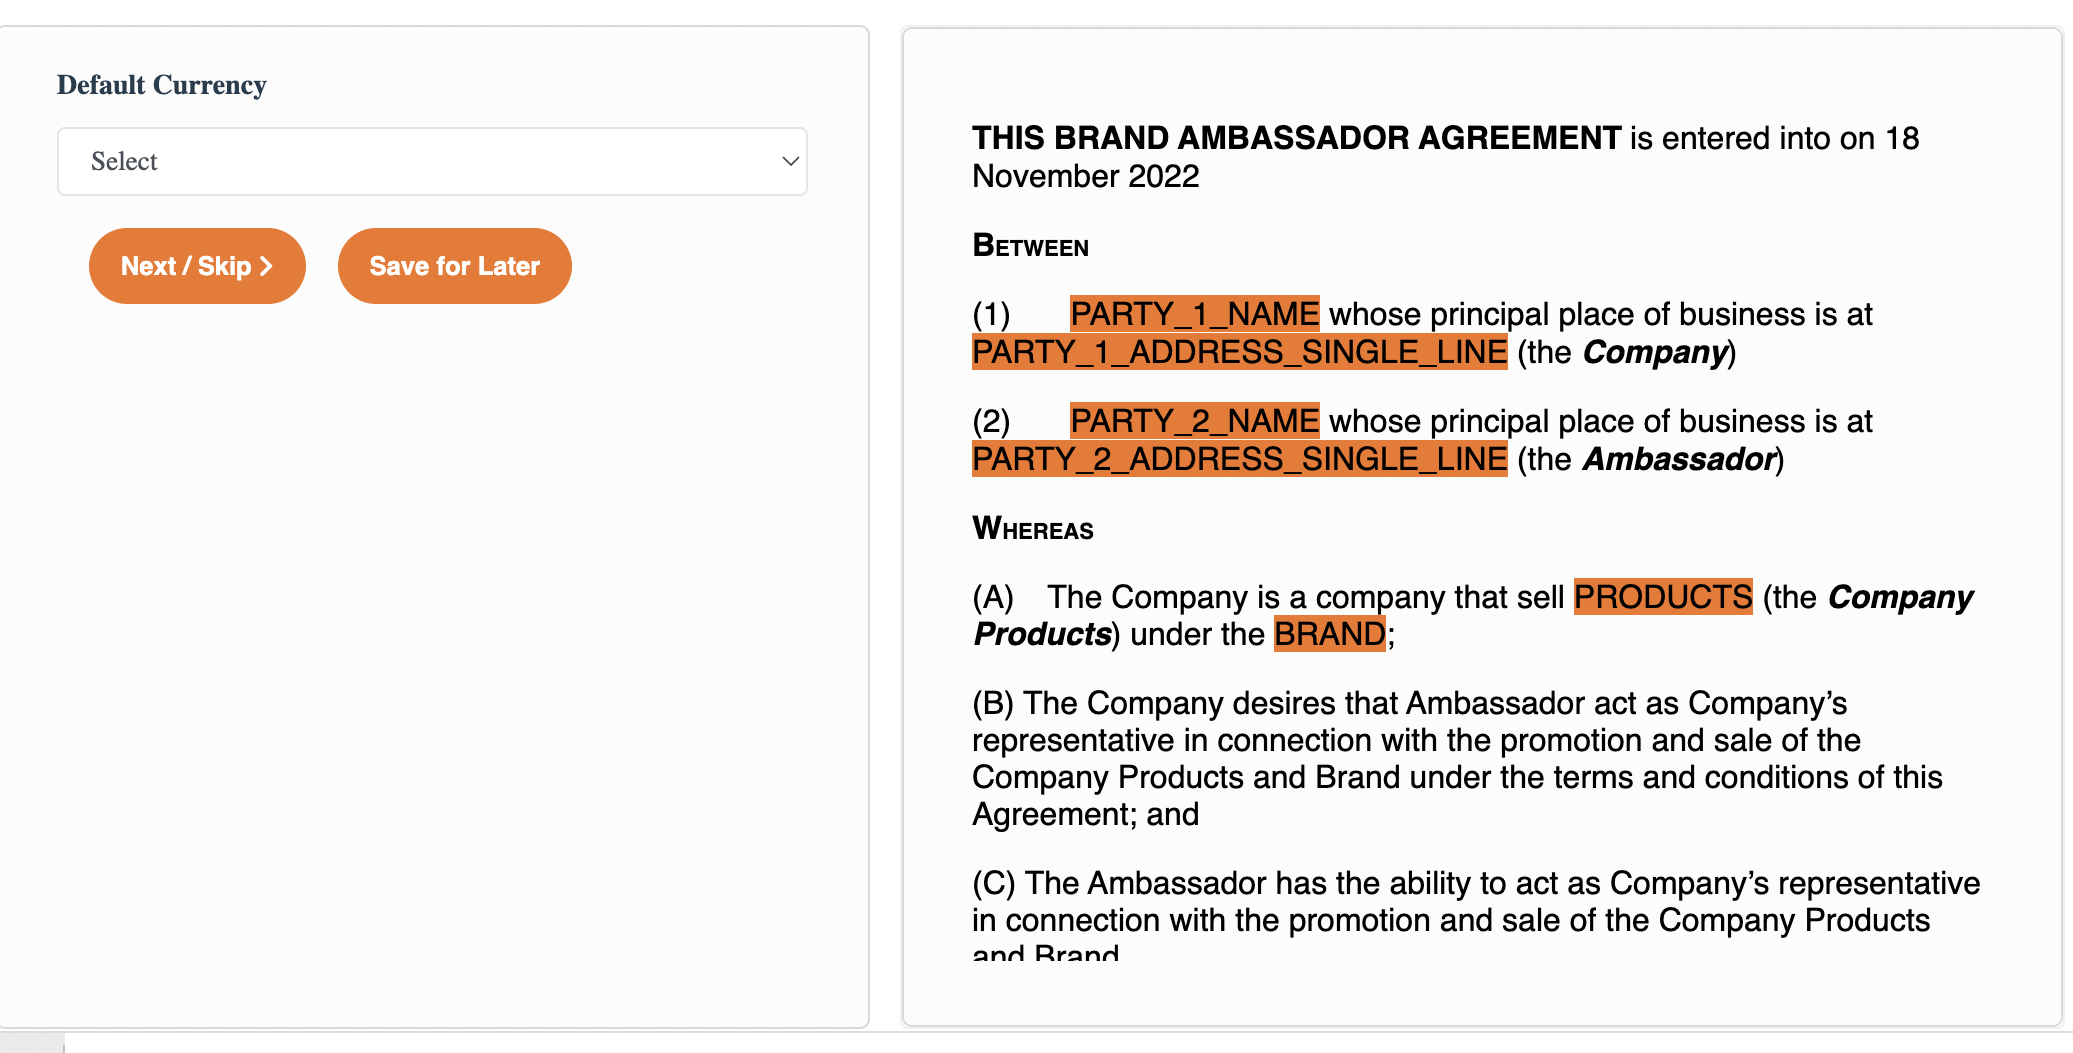 Brand Ambassador Contract Template - Sign Templates